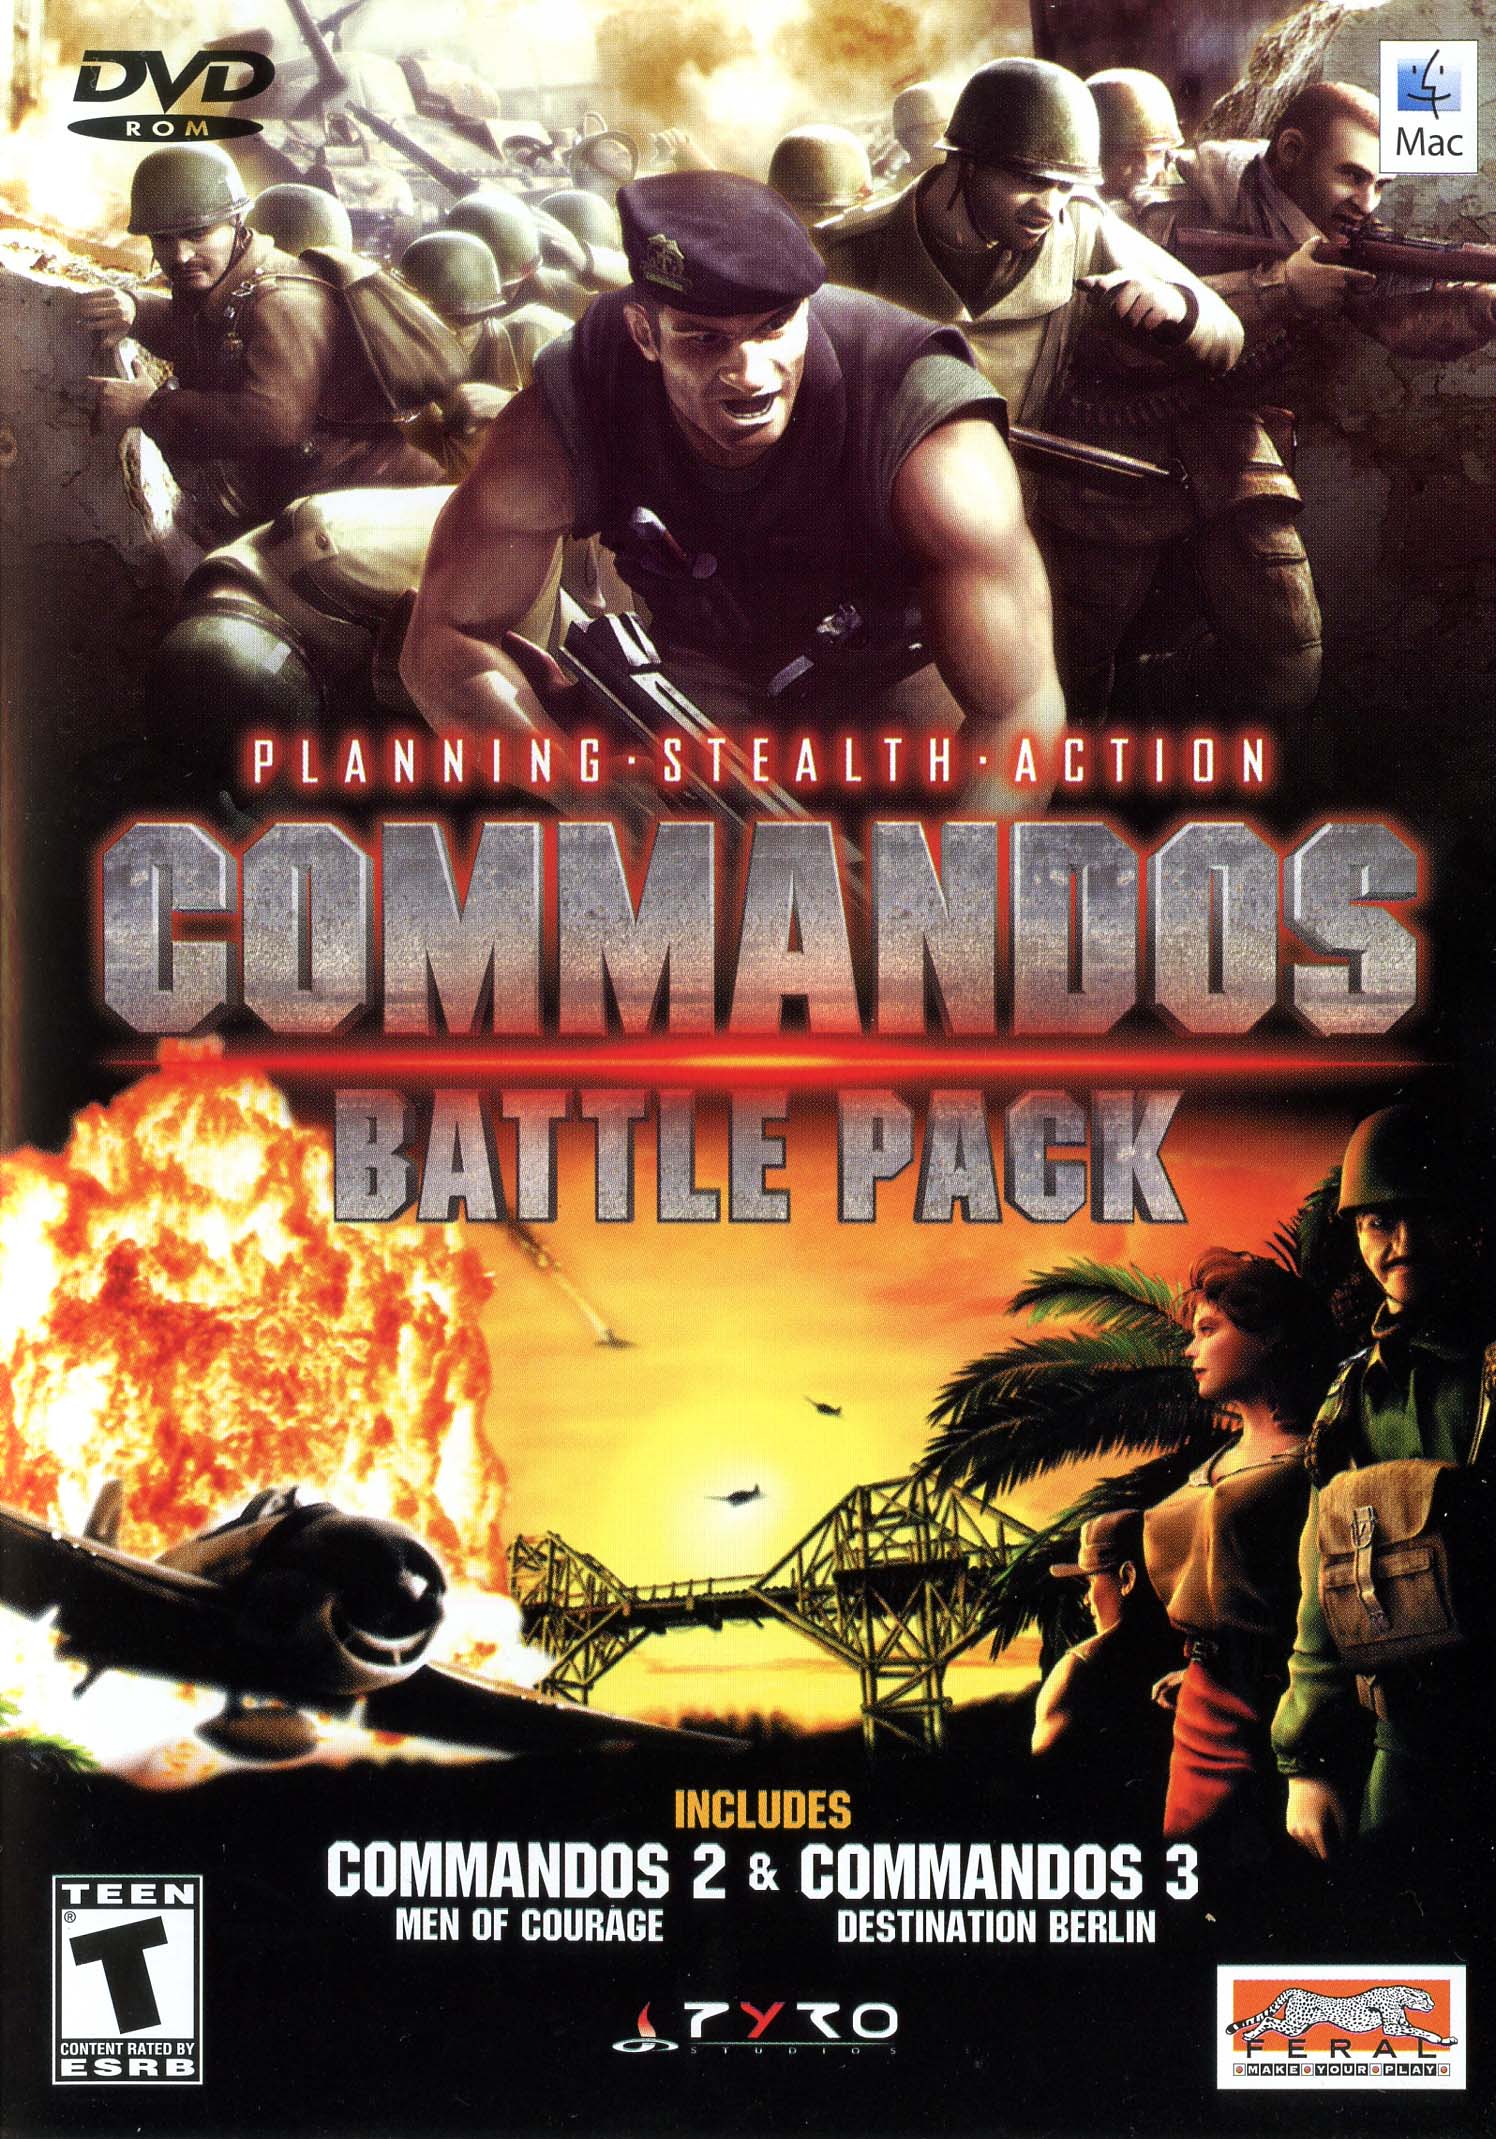 Commandos battle pack mac download windows 10